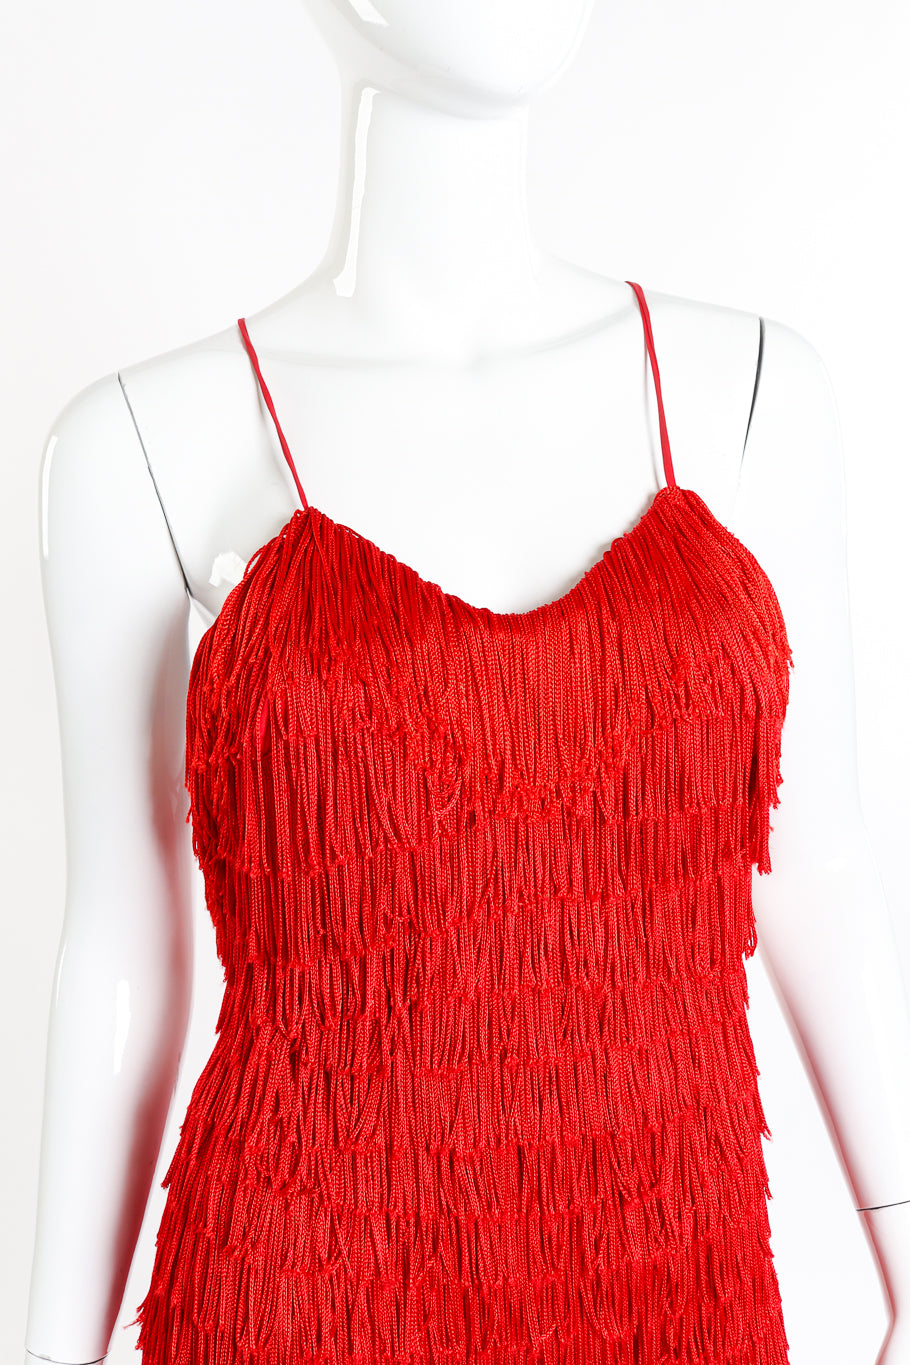 Katharine Hamnett Backless Fringe Dress front on mannequin closeup @recessla